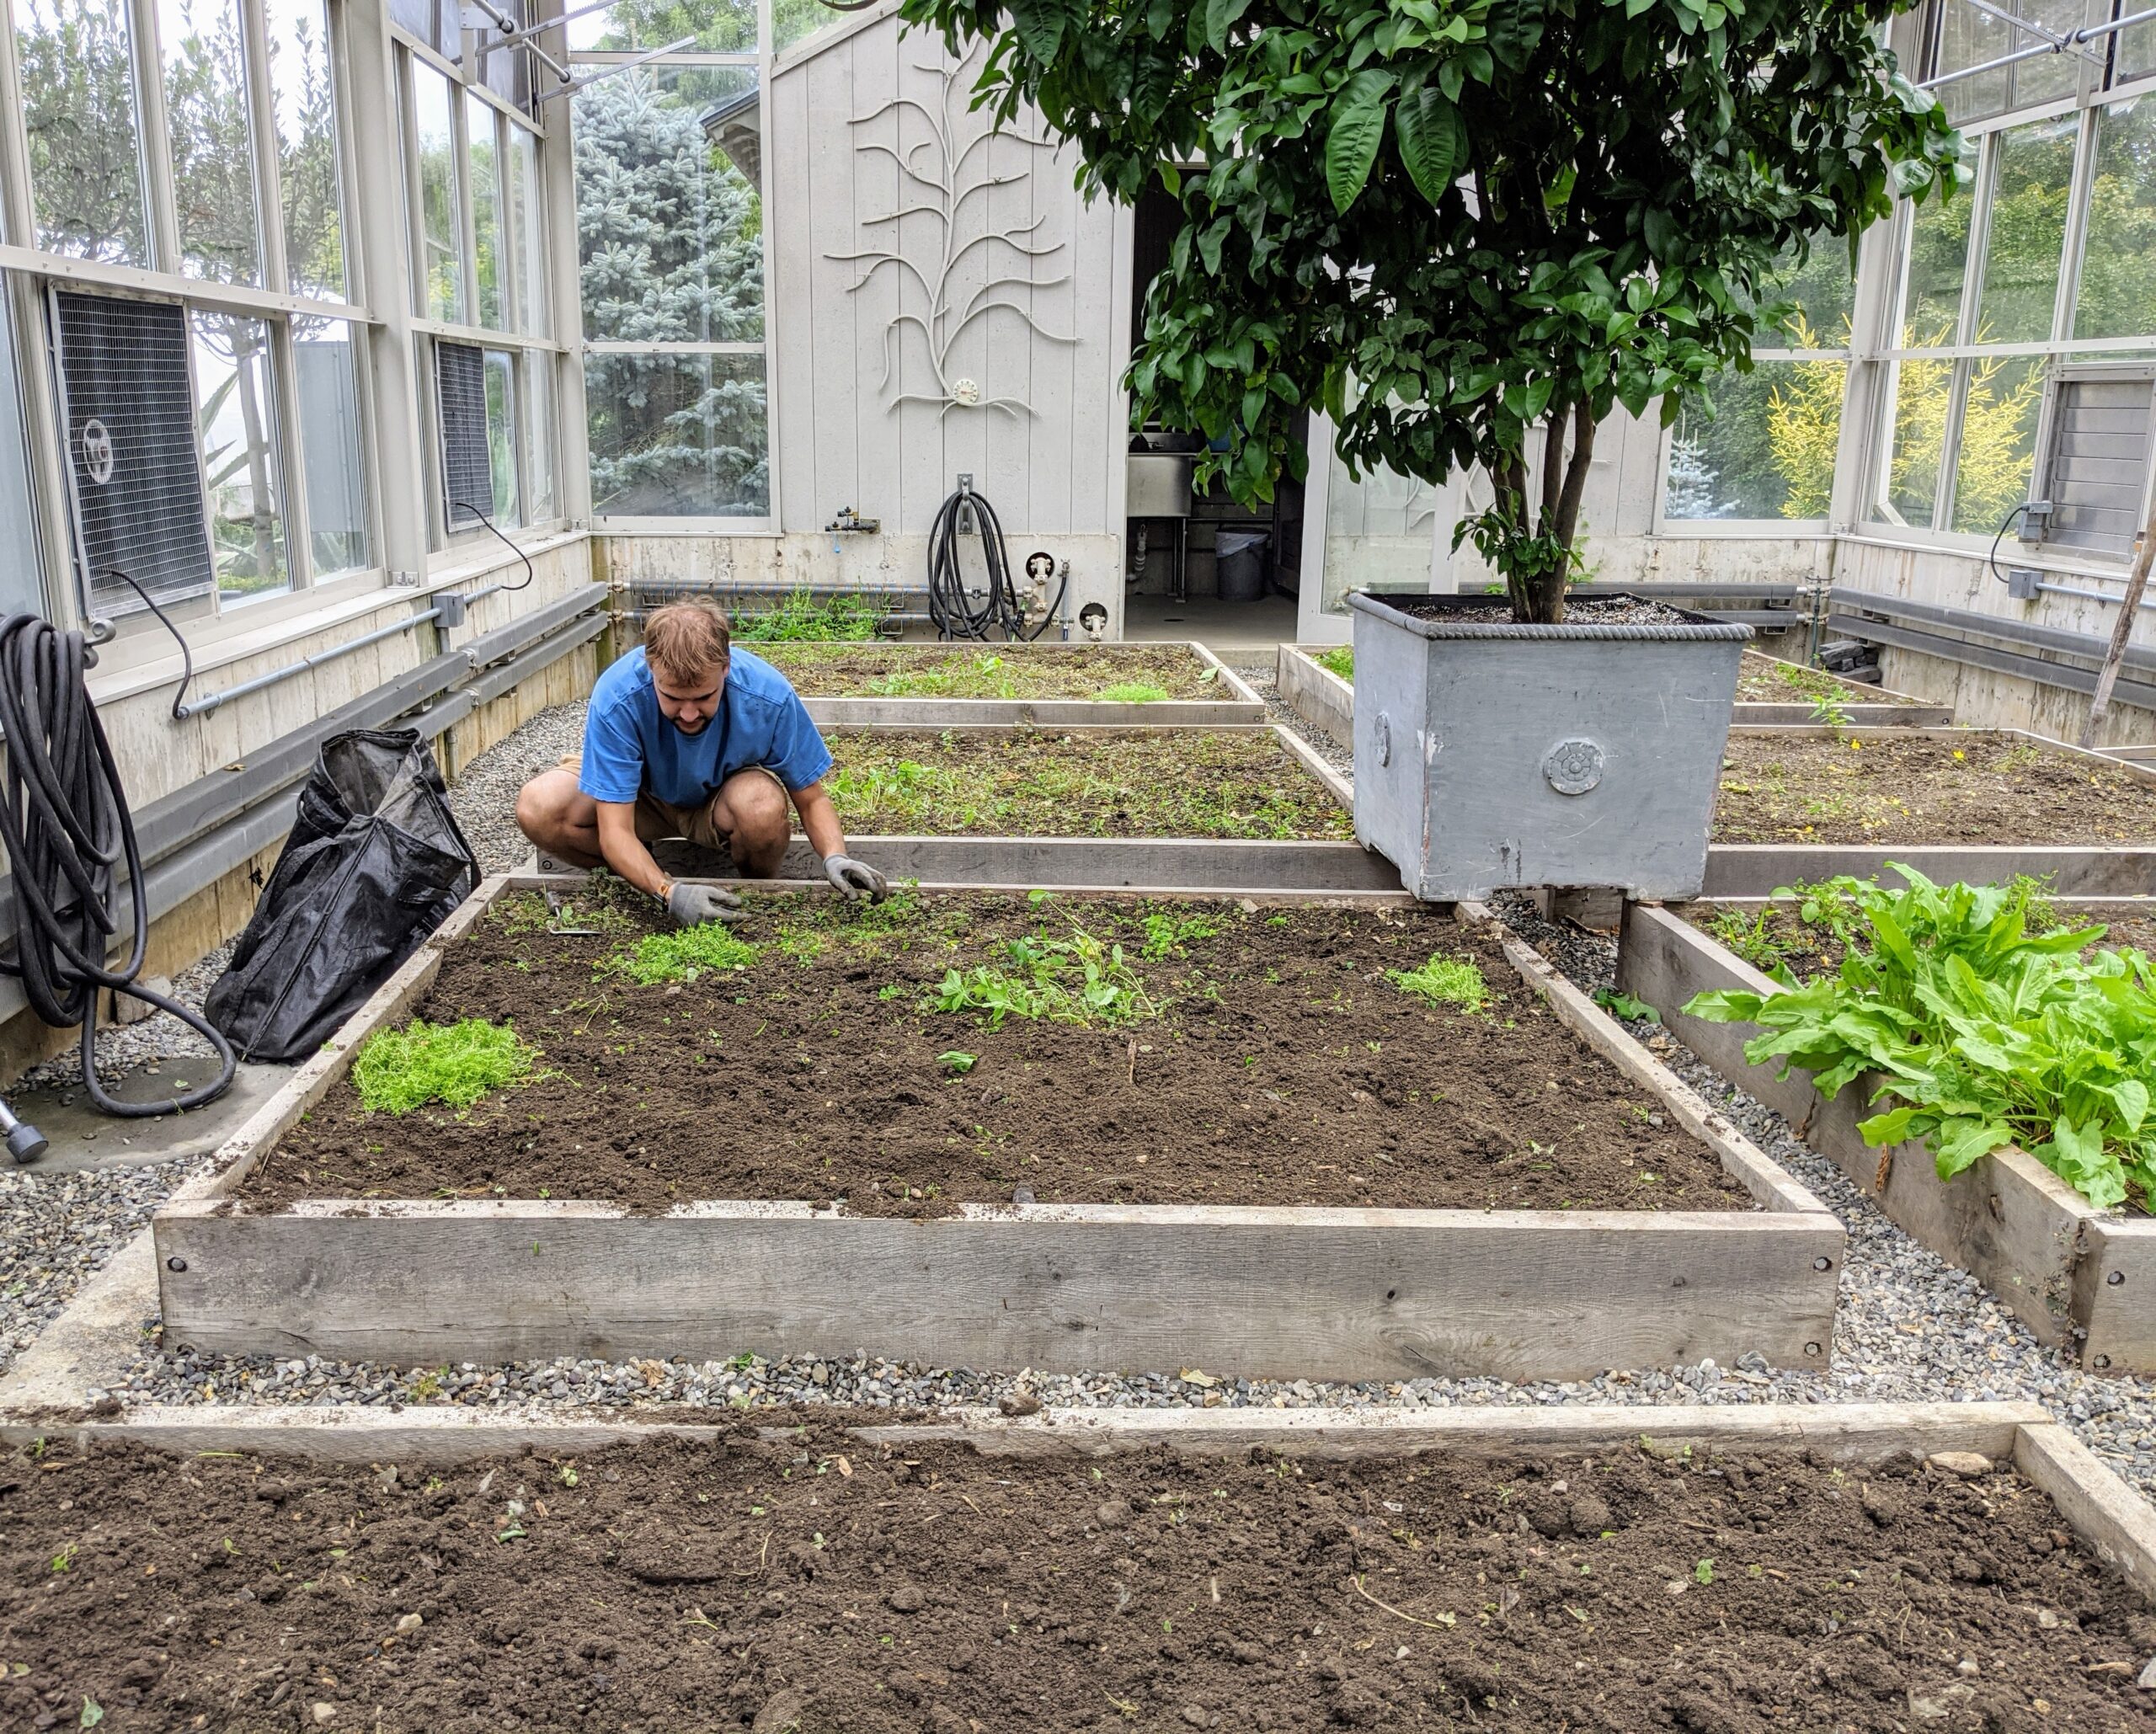 The Basics of Organic Gardening In Raised Garden Beds